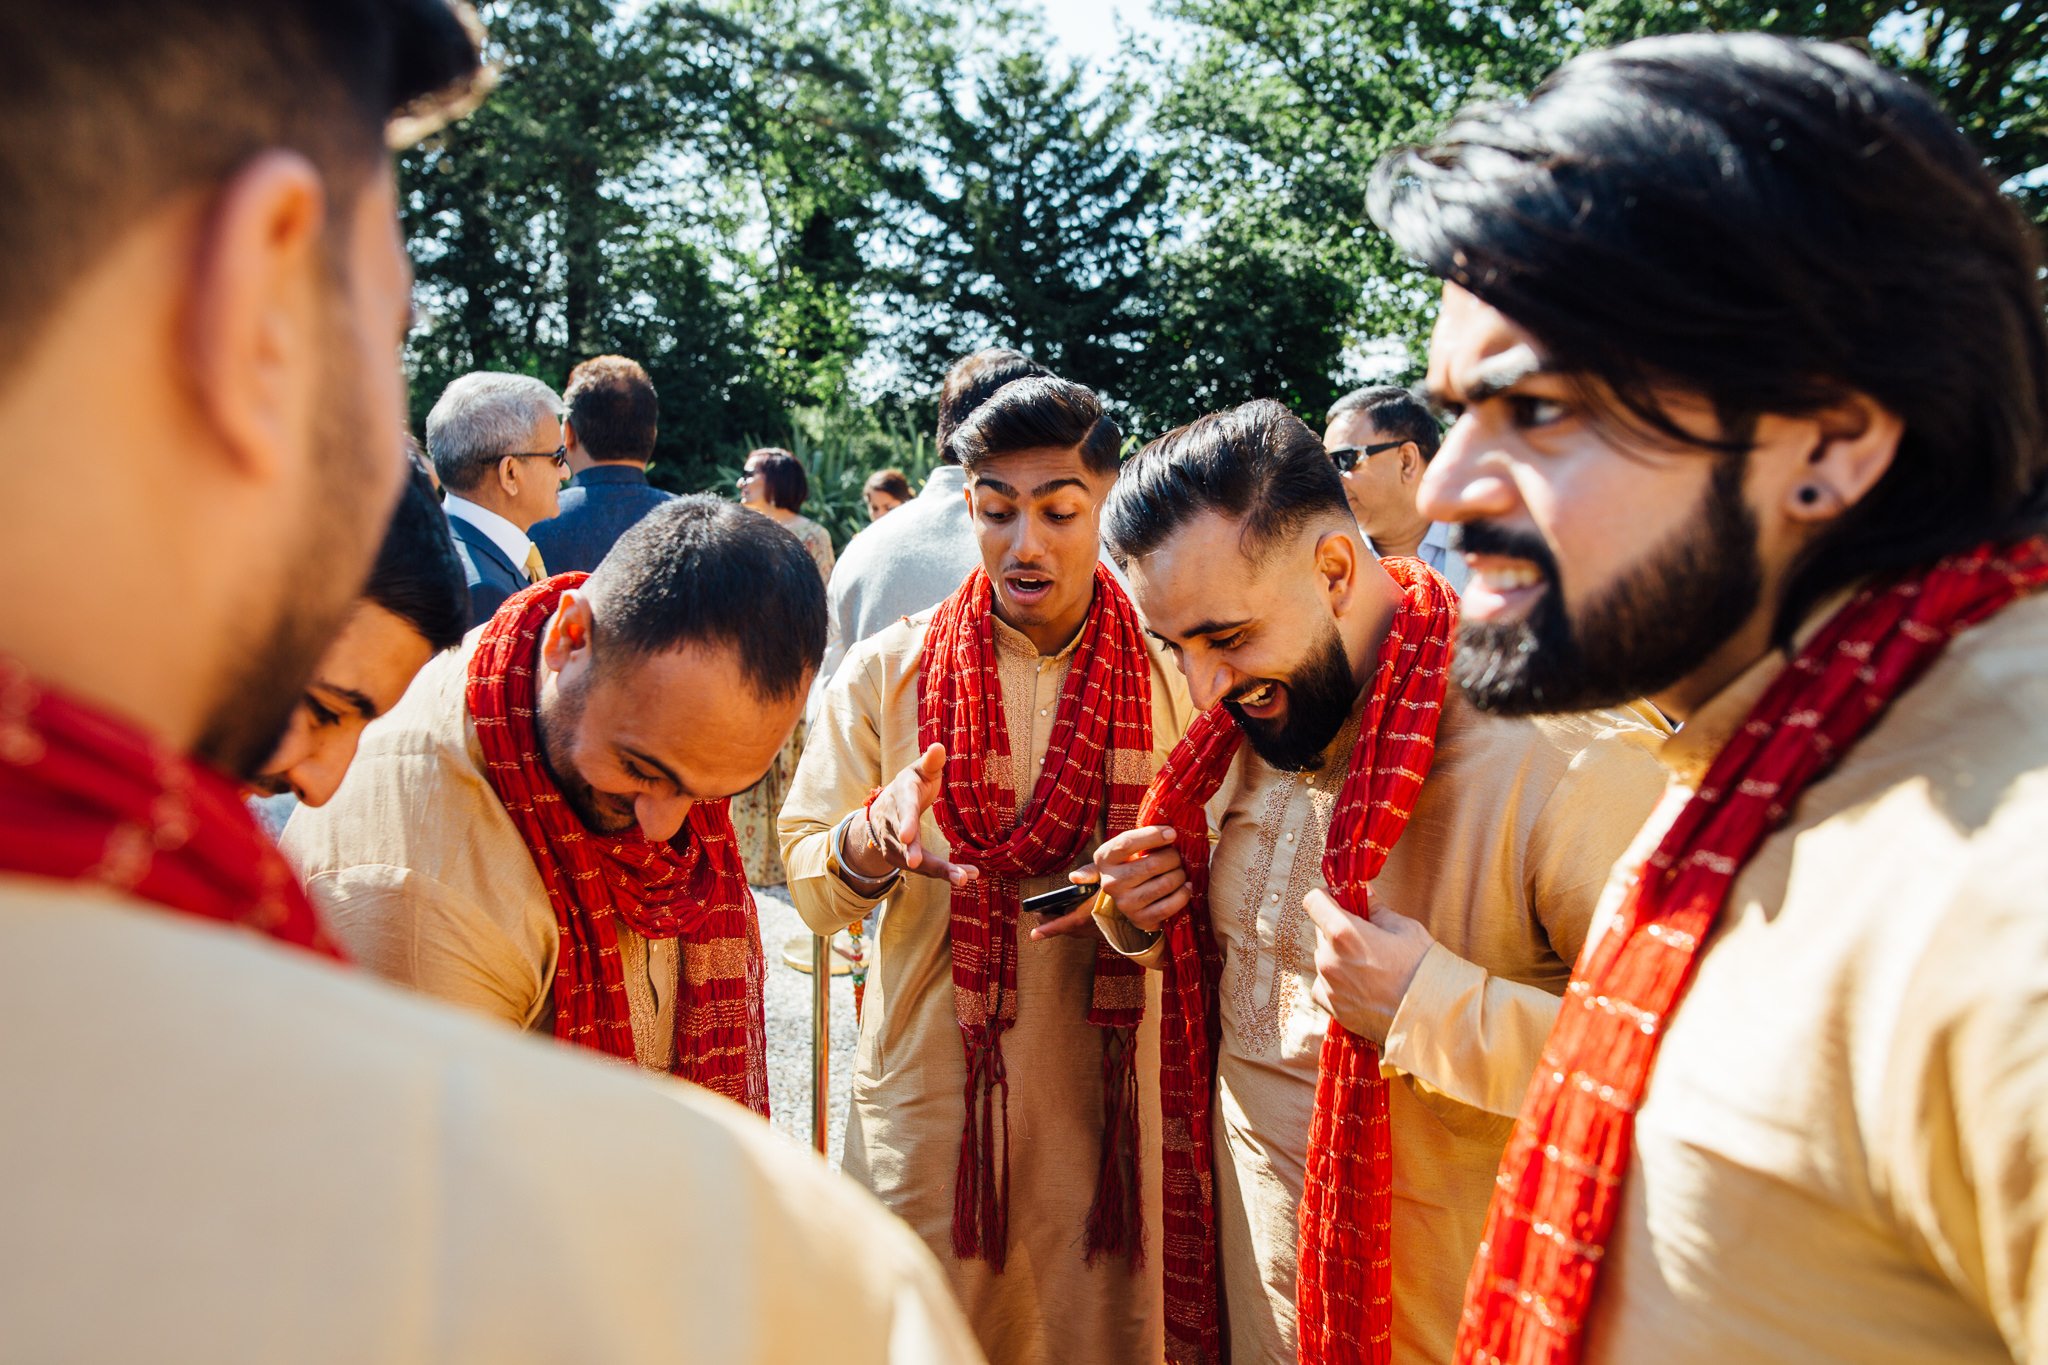  Men joke outside Trunkwell House in Berkshire wearing their traditional Sikh attire 